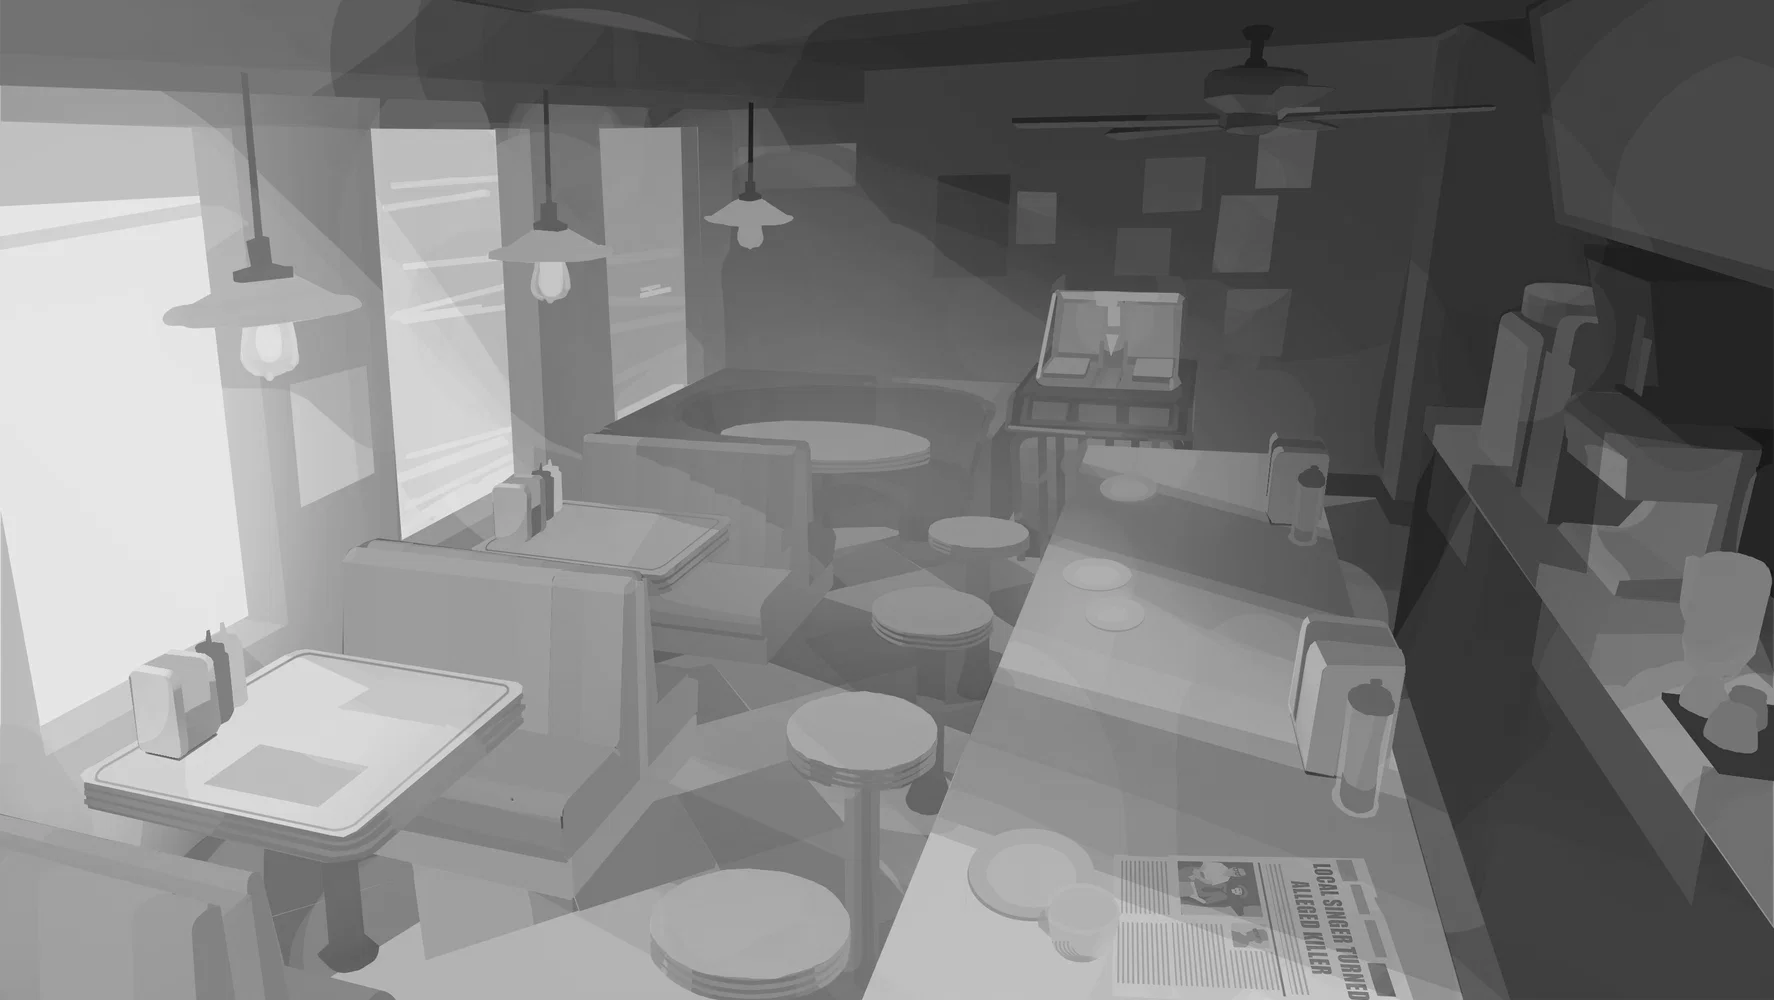 B&W scene of a cozy yet slightly grimy diner